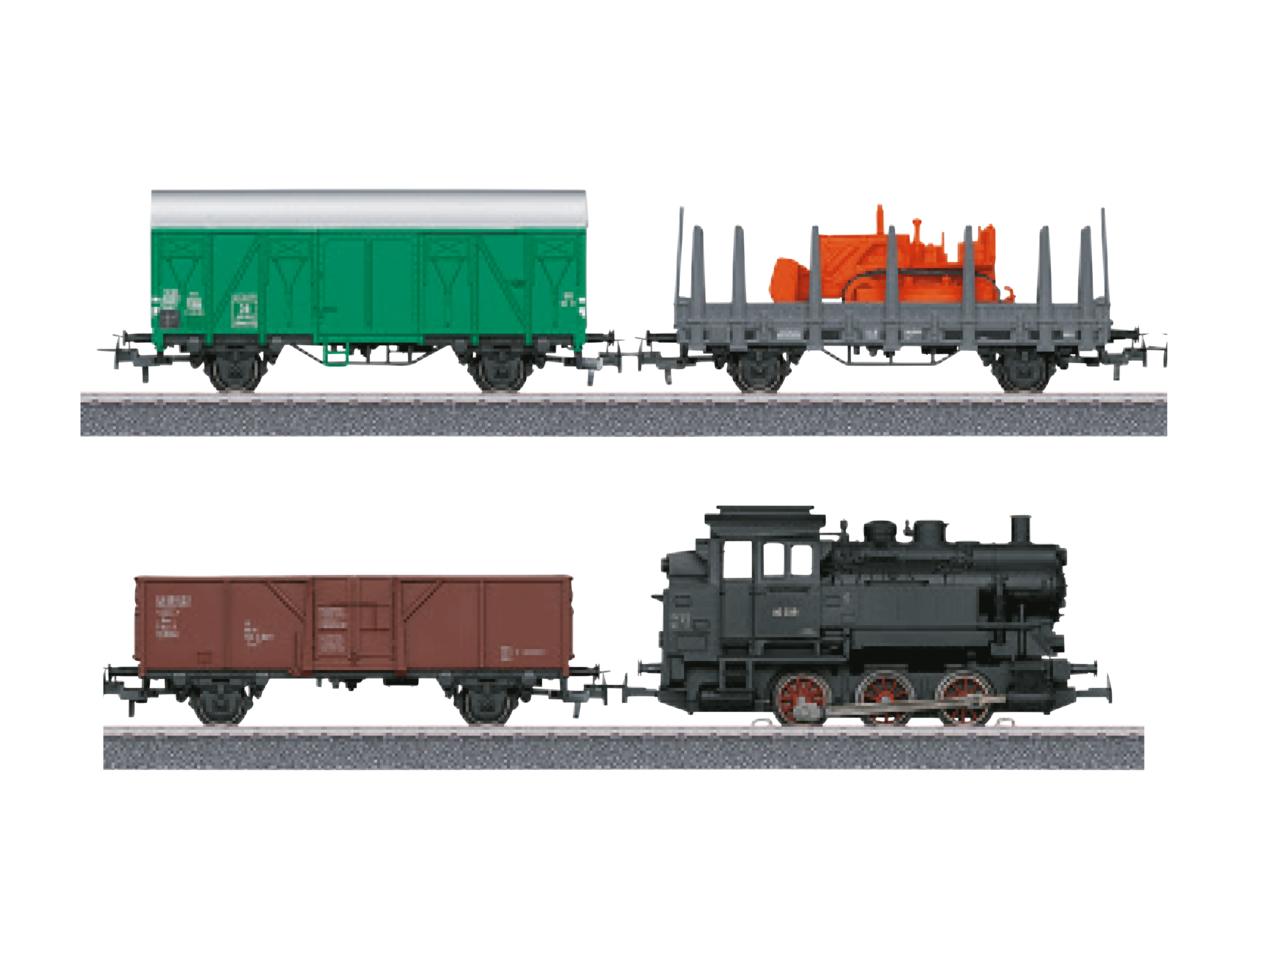 MÄRKLIN Freight Train Model Railroad Starter Set